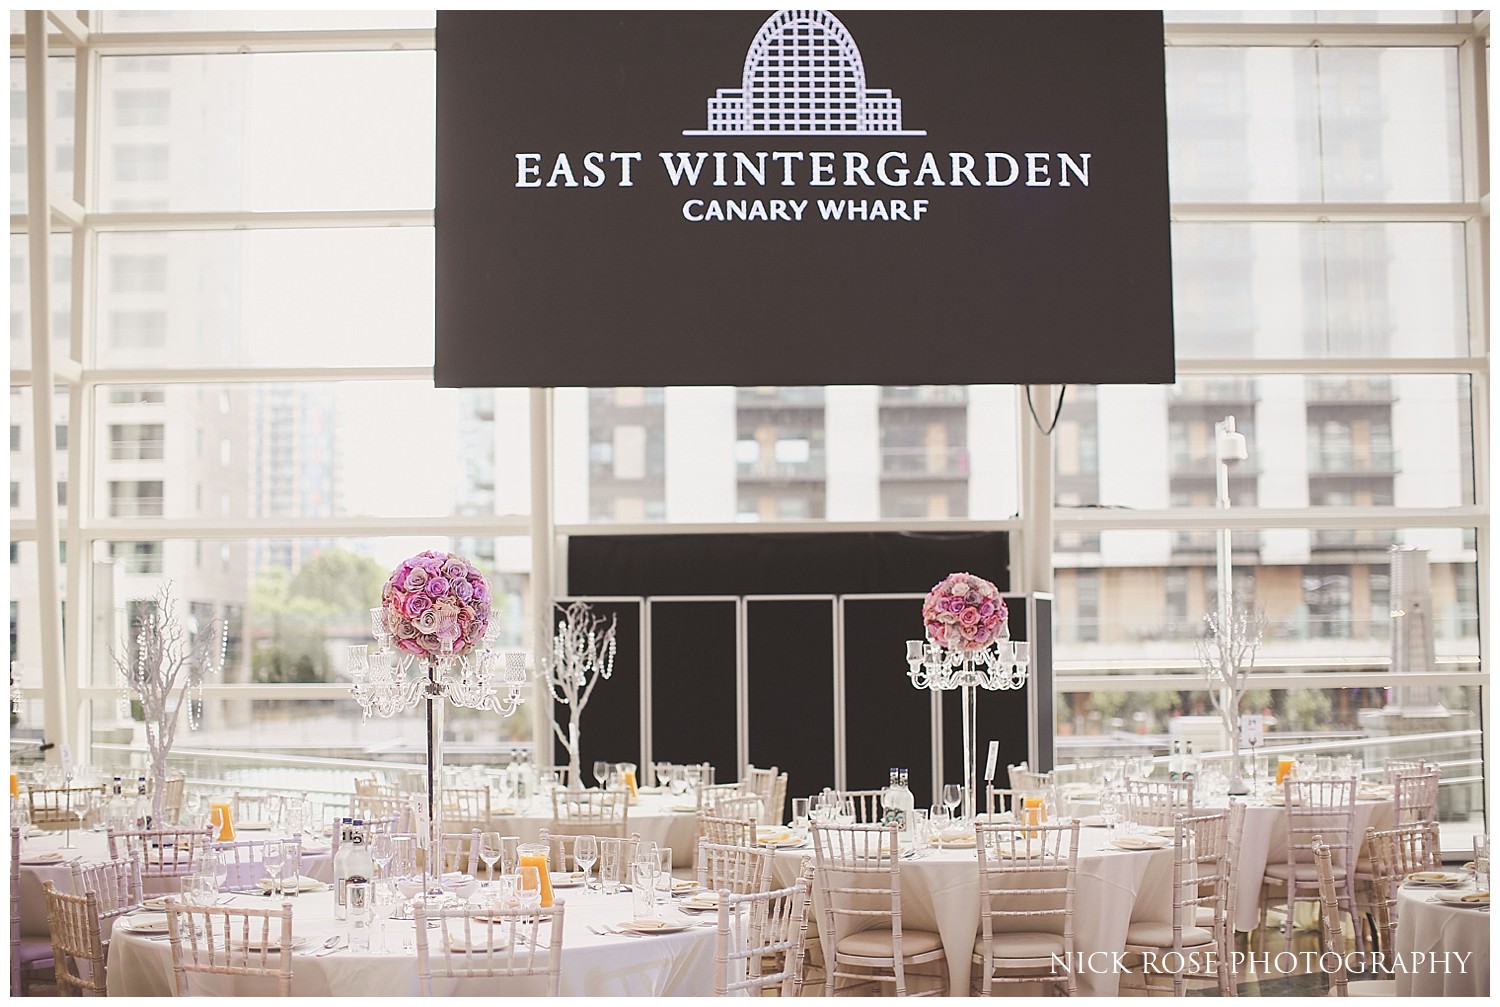  East Wintergarden Indian wedding reception setup 